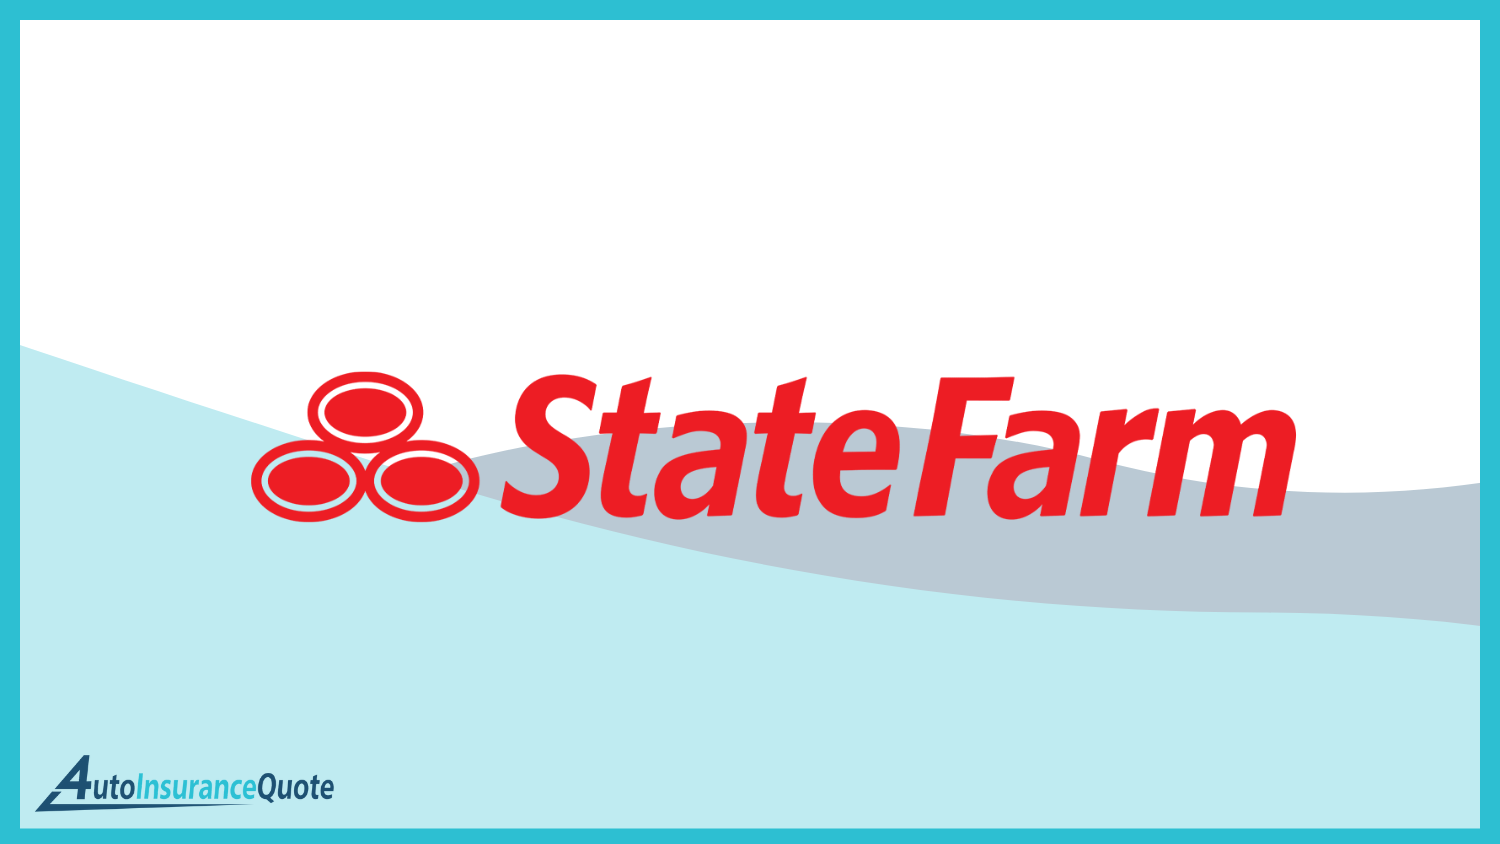 State Farm: Best Auto Insurance Companies for Seniors